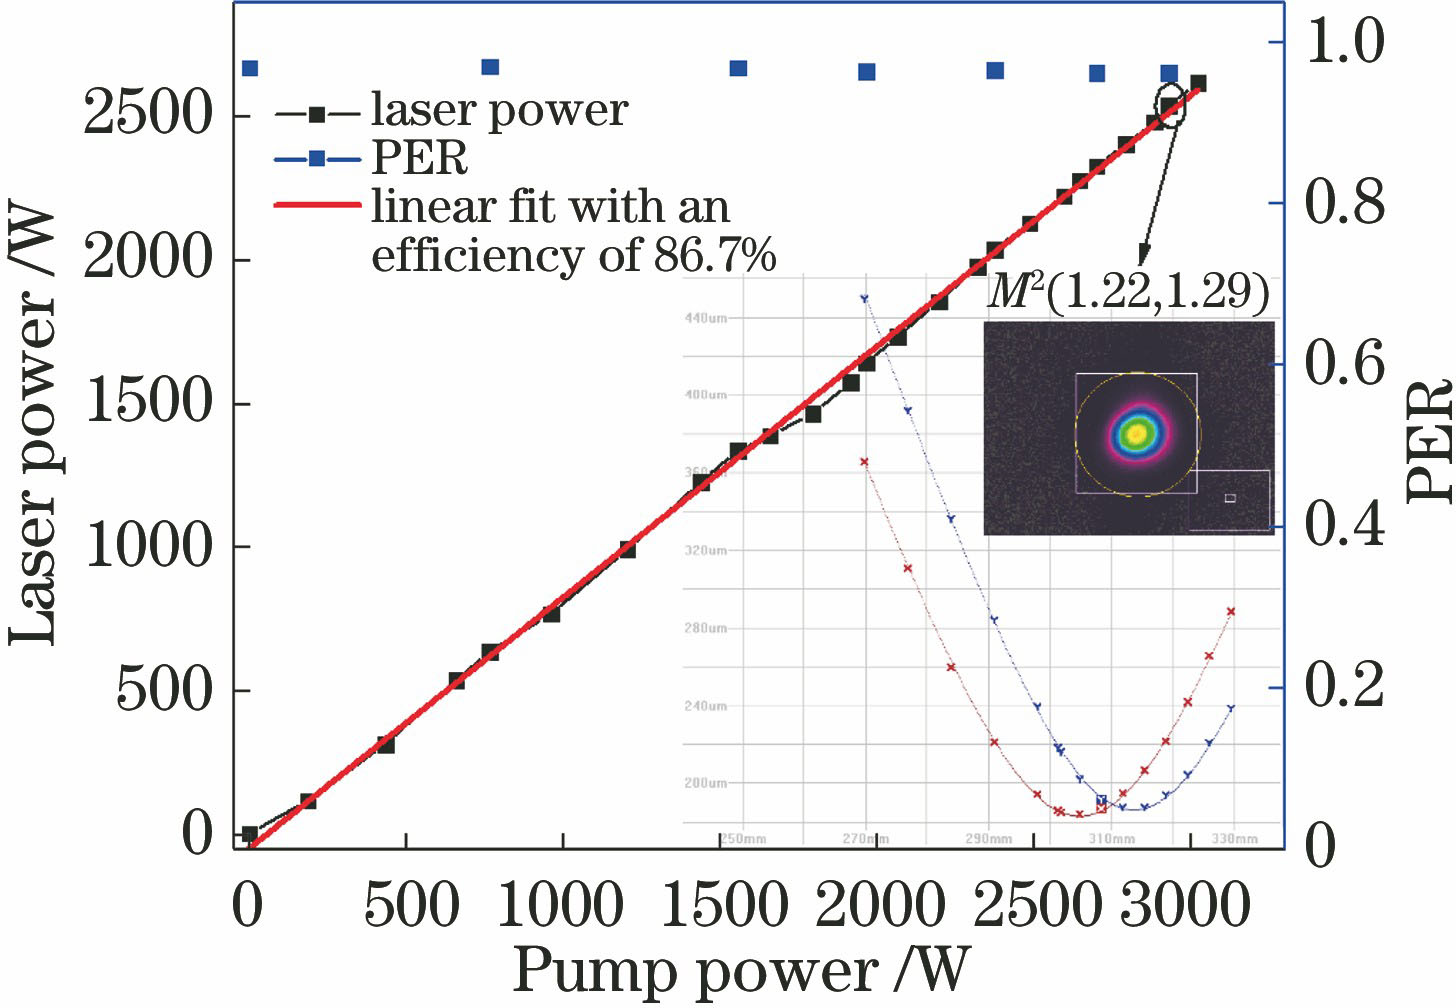 Laser power and PER versus pump power